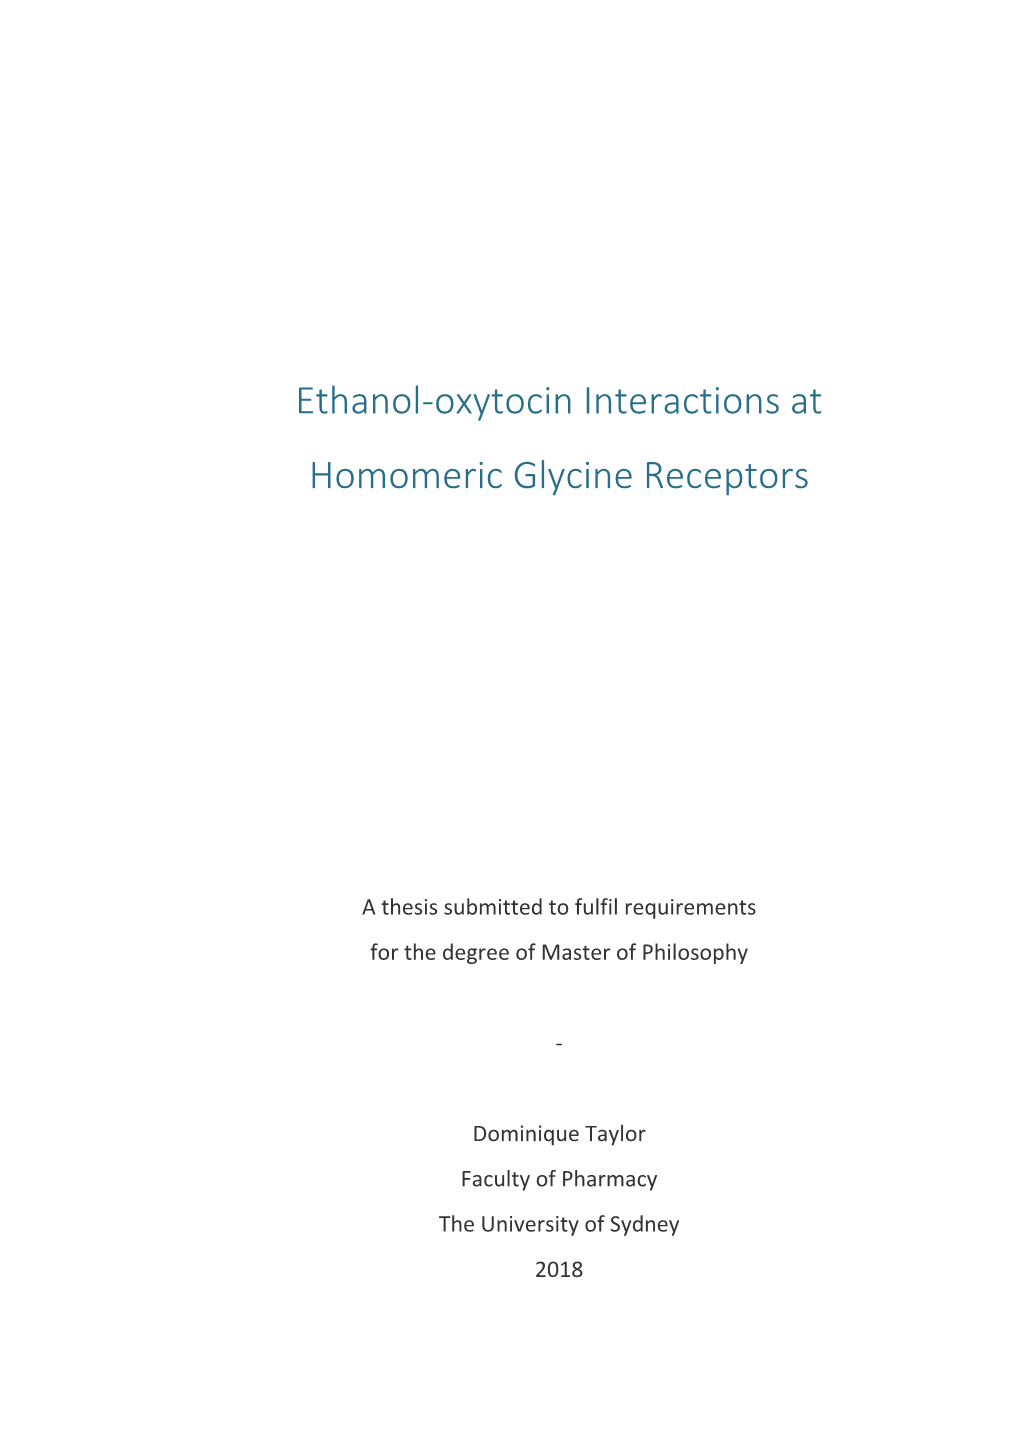 Ethanol-Oxytocin Interactions at Homomeric Glycine Receptors